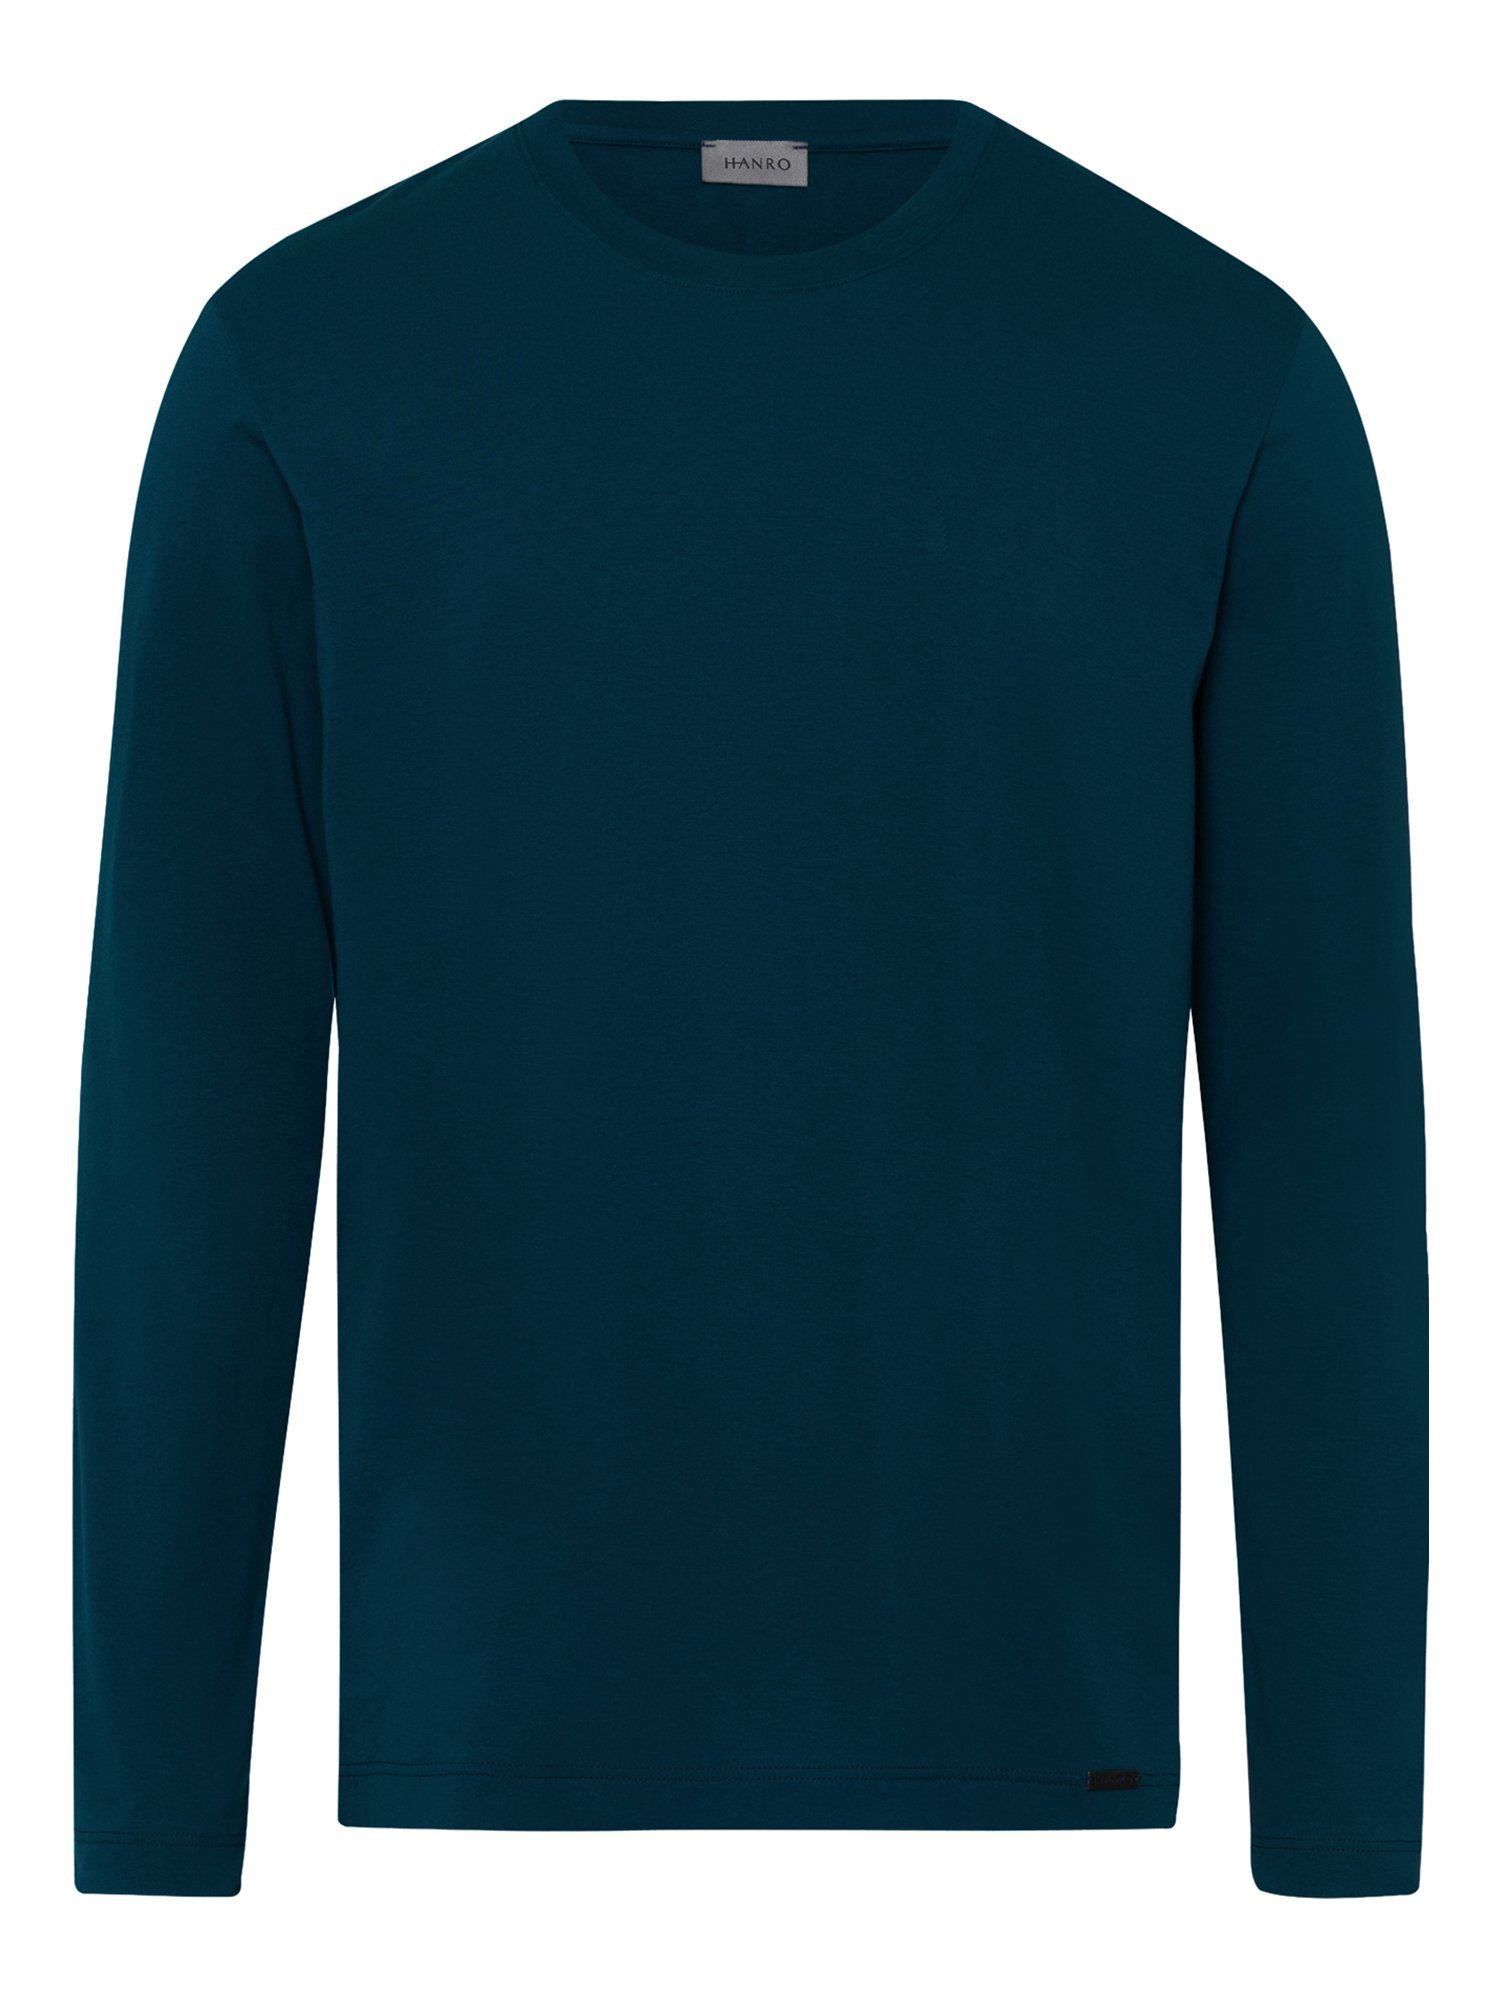 Hanro Longsleeve Living Shirts oxford blue